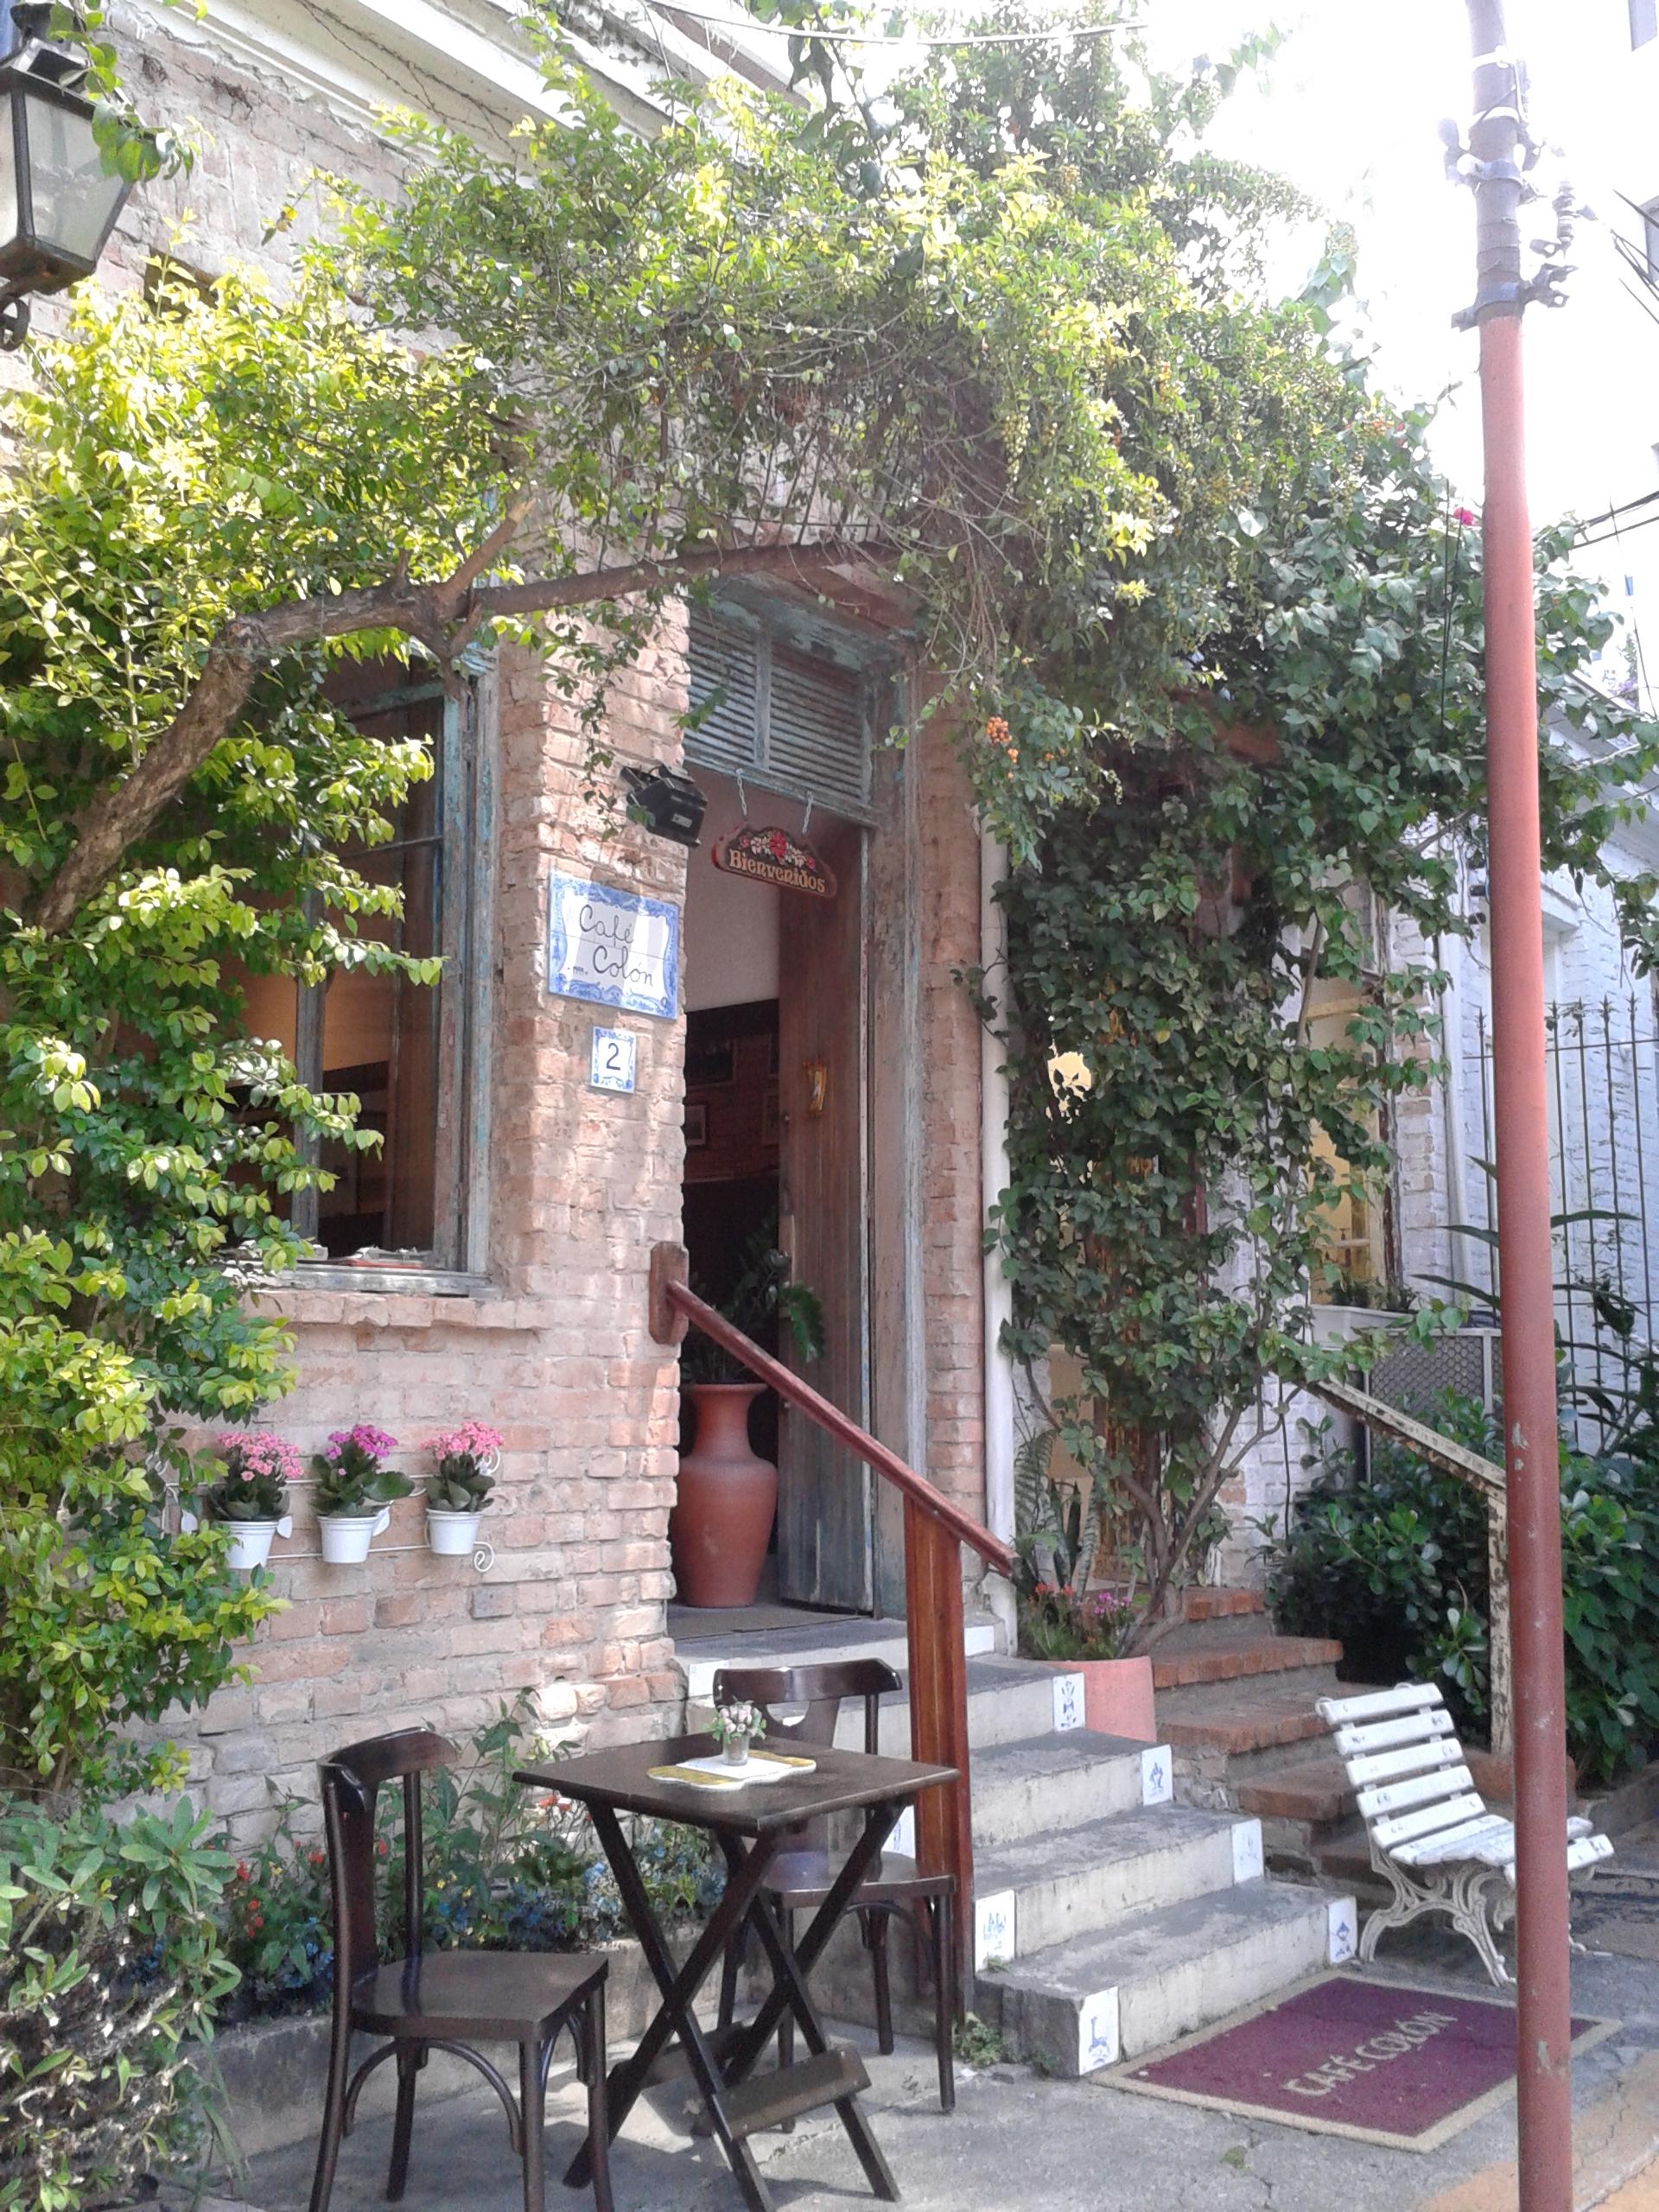 Cover image of this place Café Colón